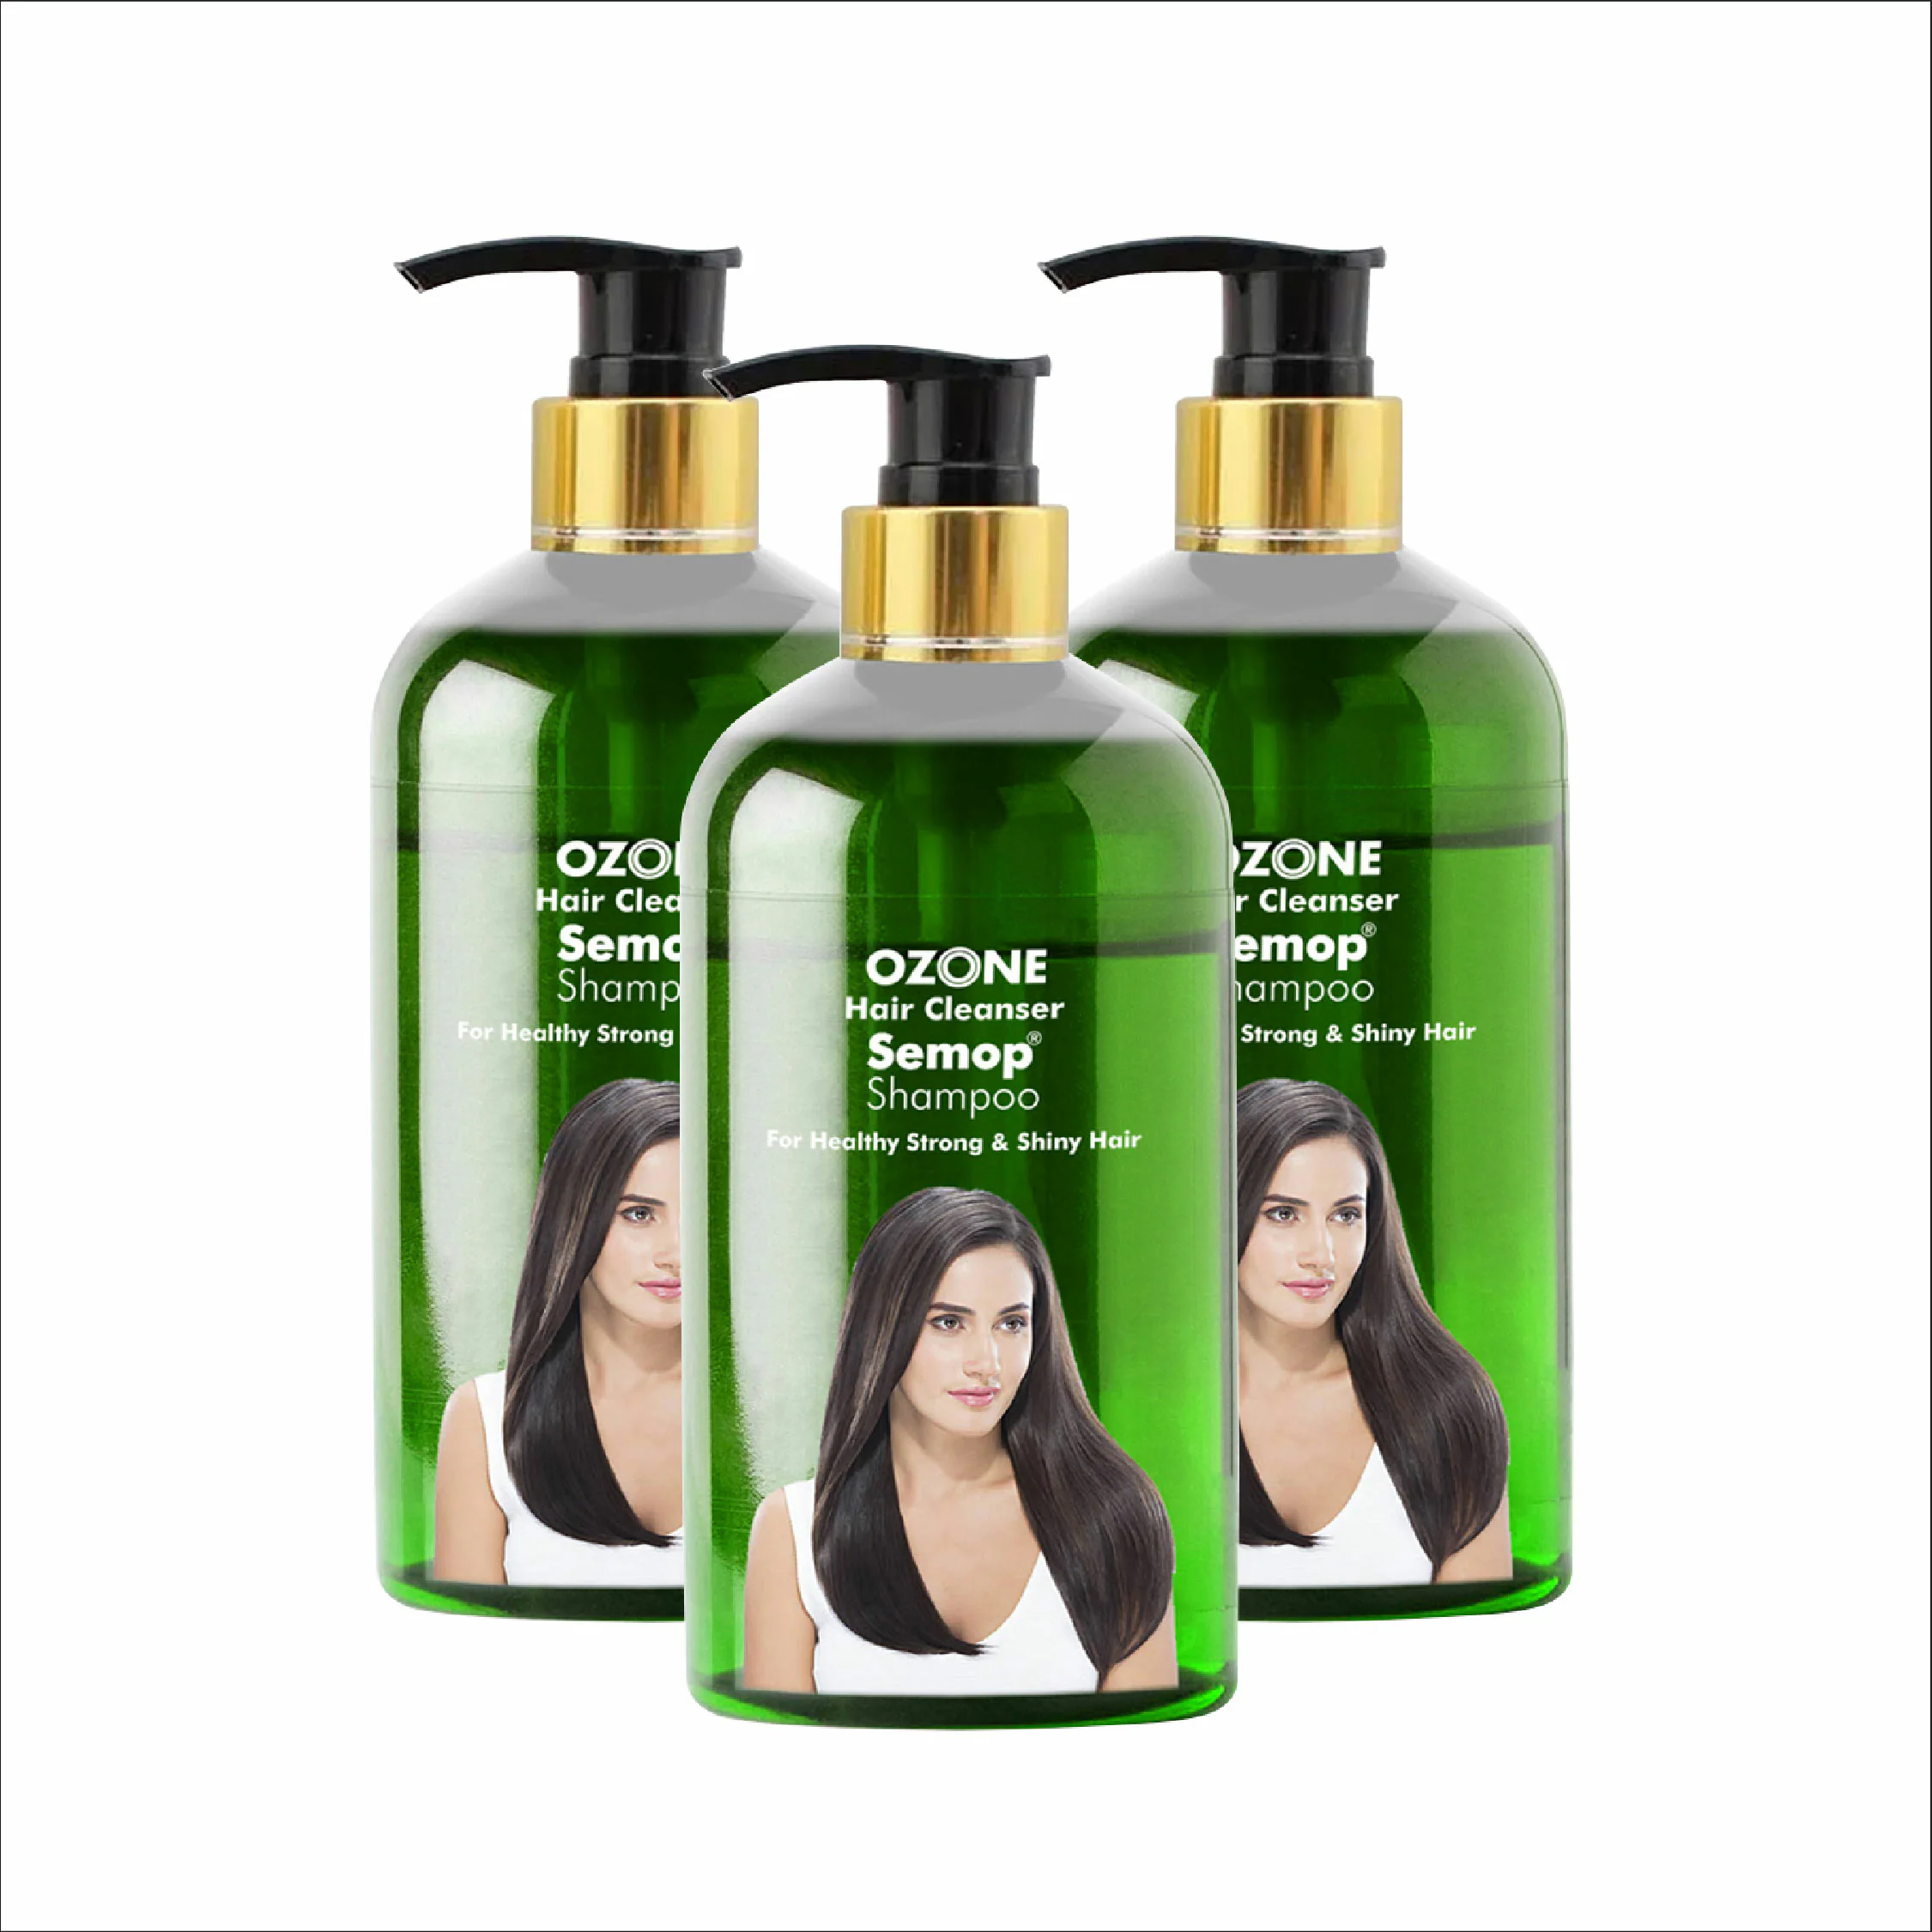 Ozone Semop Hair Cleanser Shampoo for Healthy, Strong & Shiny Hair - 300ml  (Pack of 3) - JioMart